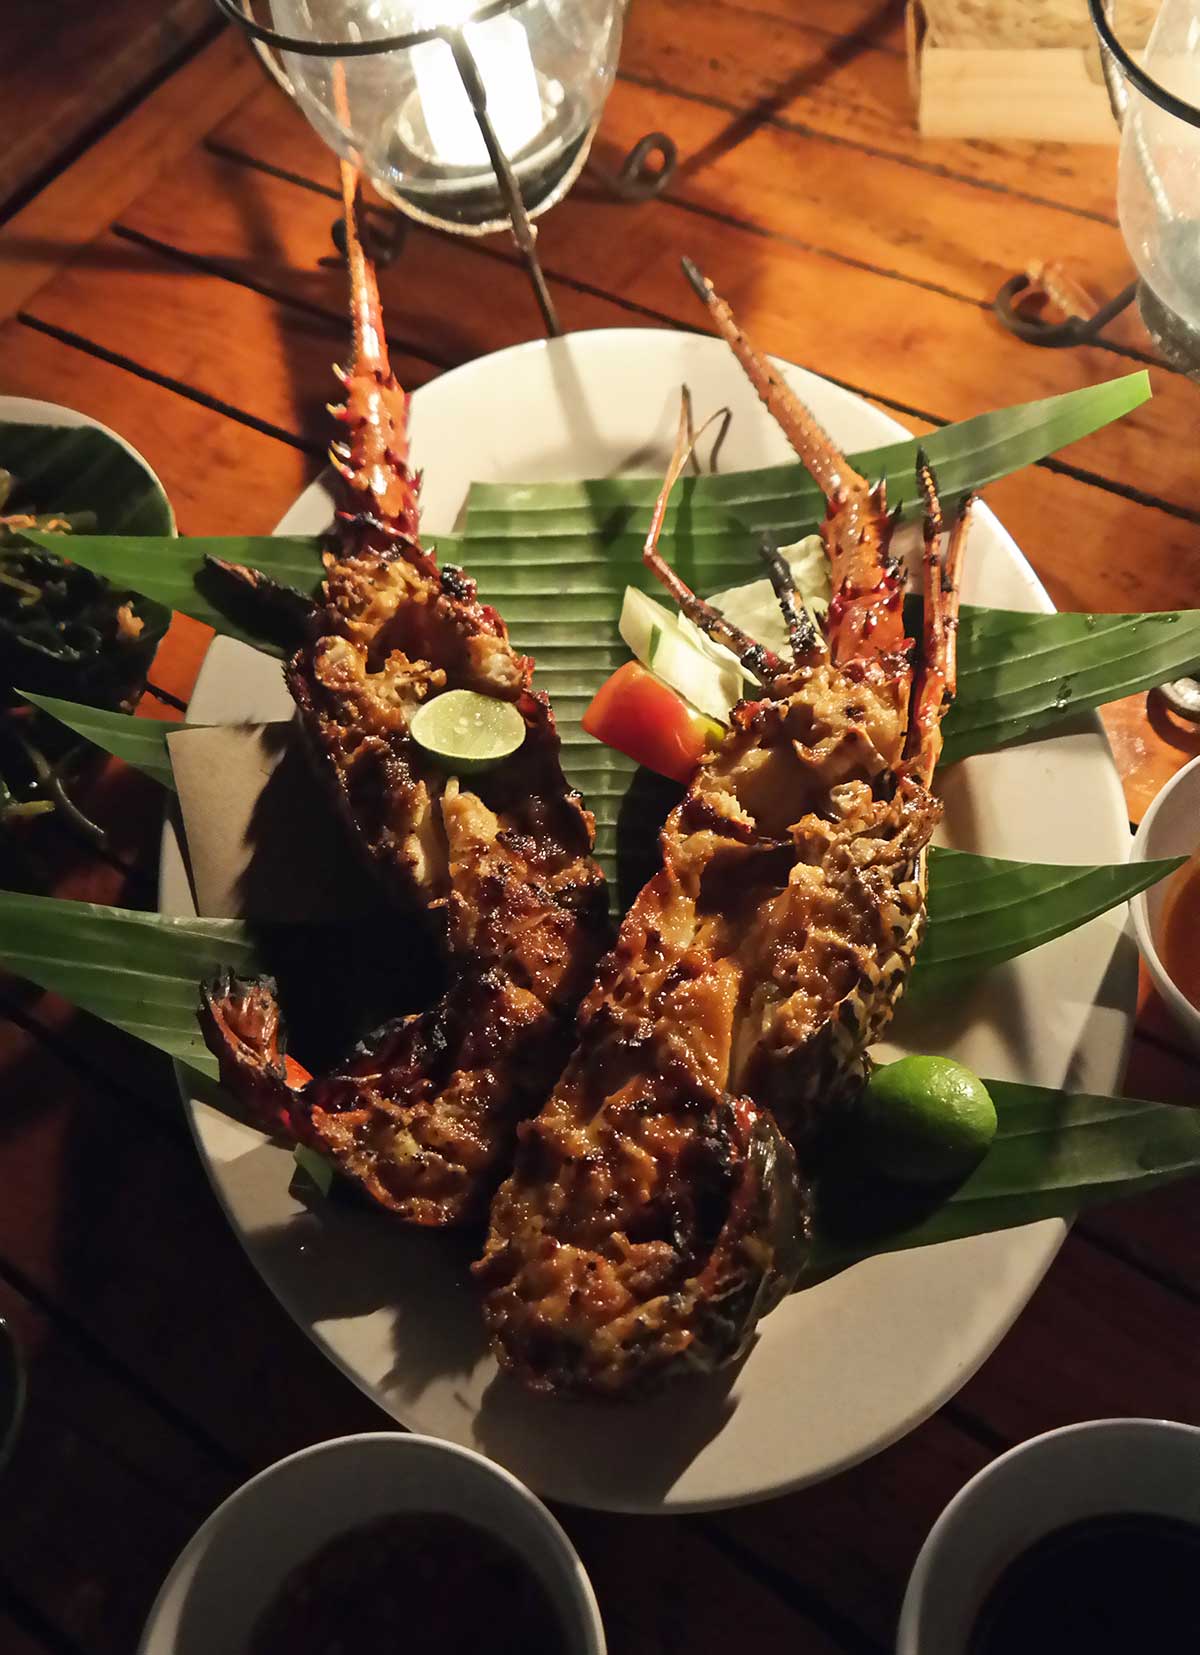 Lobster dinner at Jimbaran beach at Menega Cafe